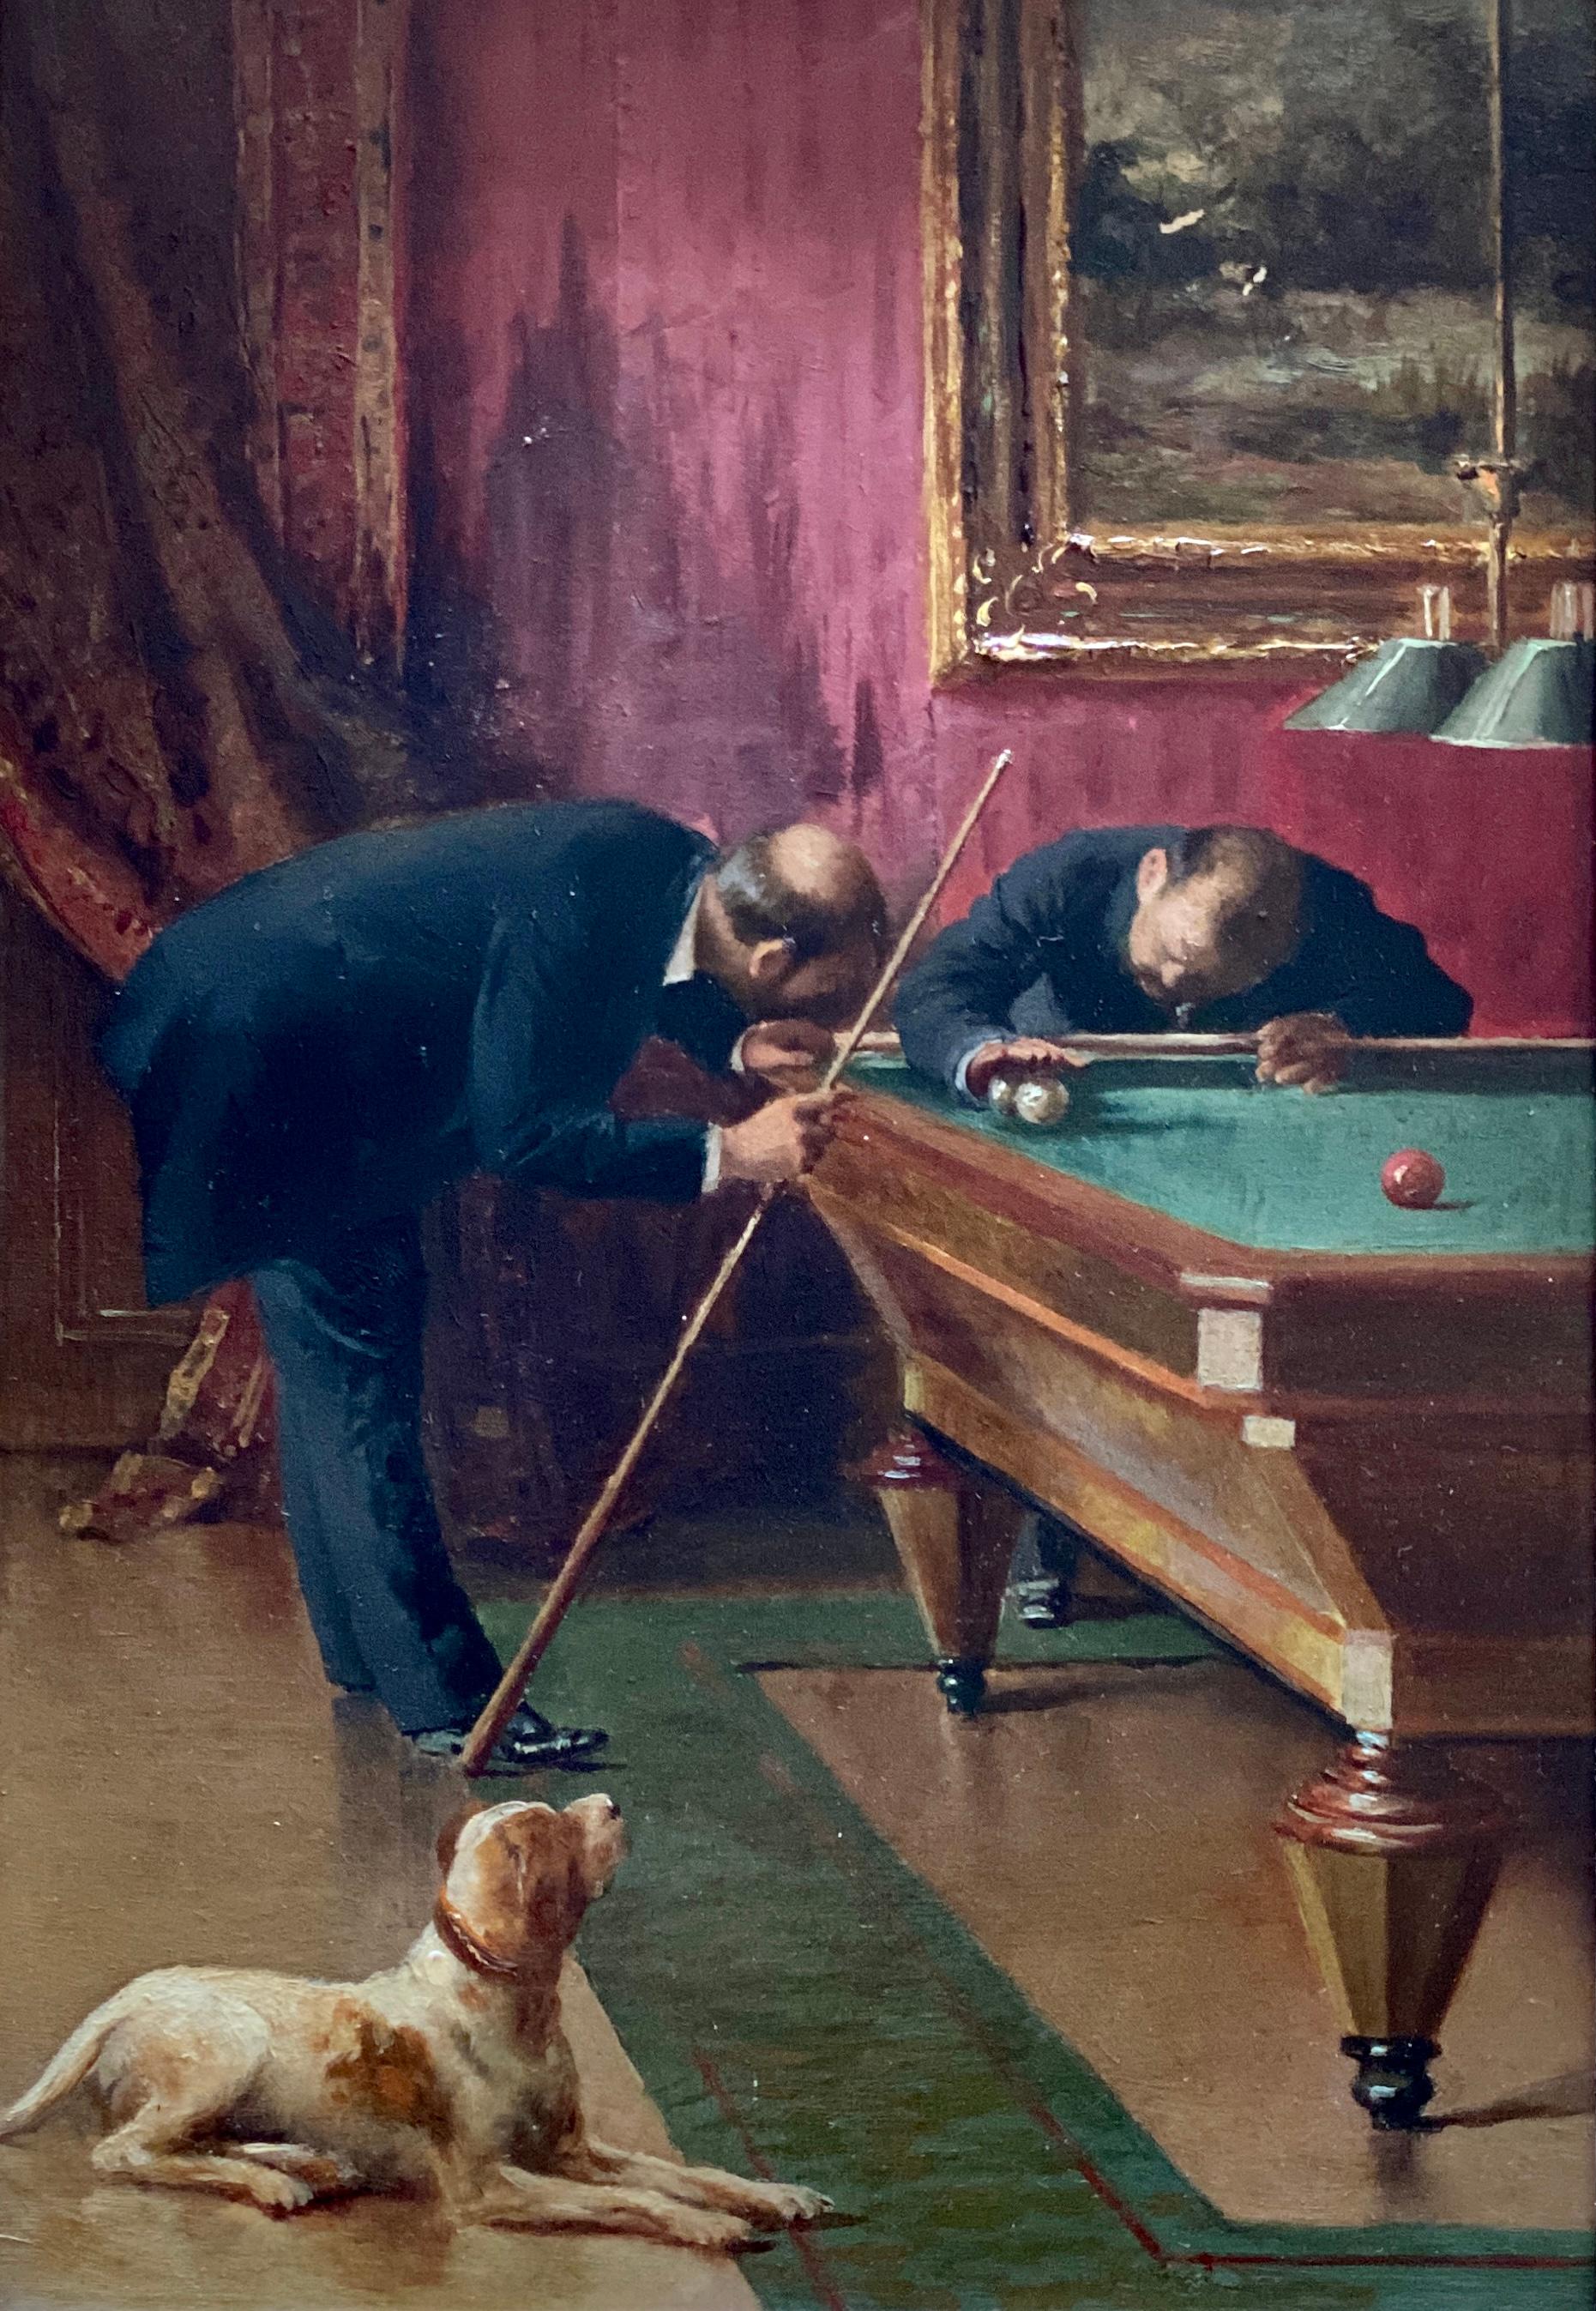 Jean Bérnard, Saint-Pétersbourg 1849 - 1935 Paris, Français, Une partie de billard - Painting de Jean Bernard